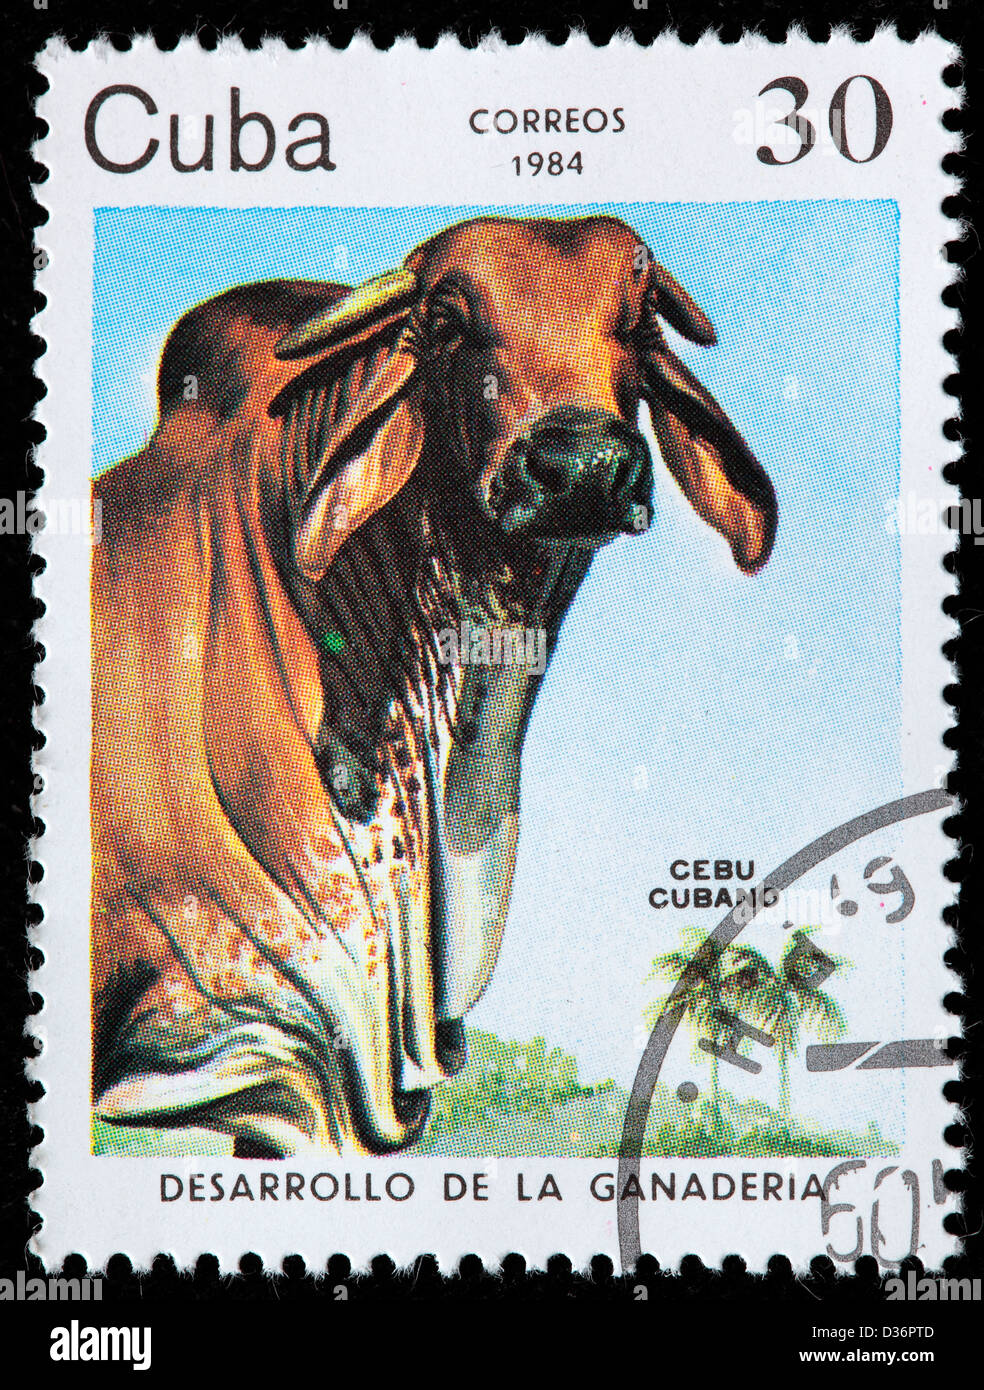 Cuban cebu, postage stamp, Cuba, 1984 Stock Photo